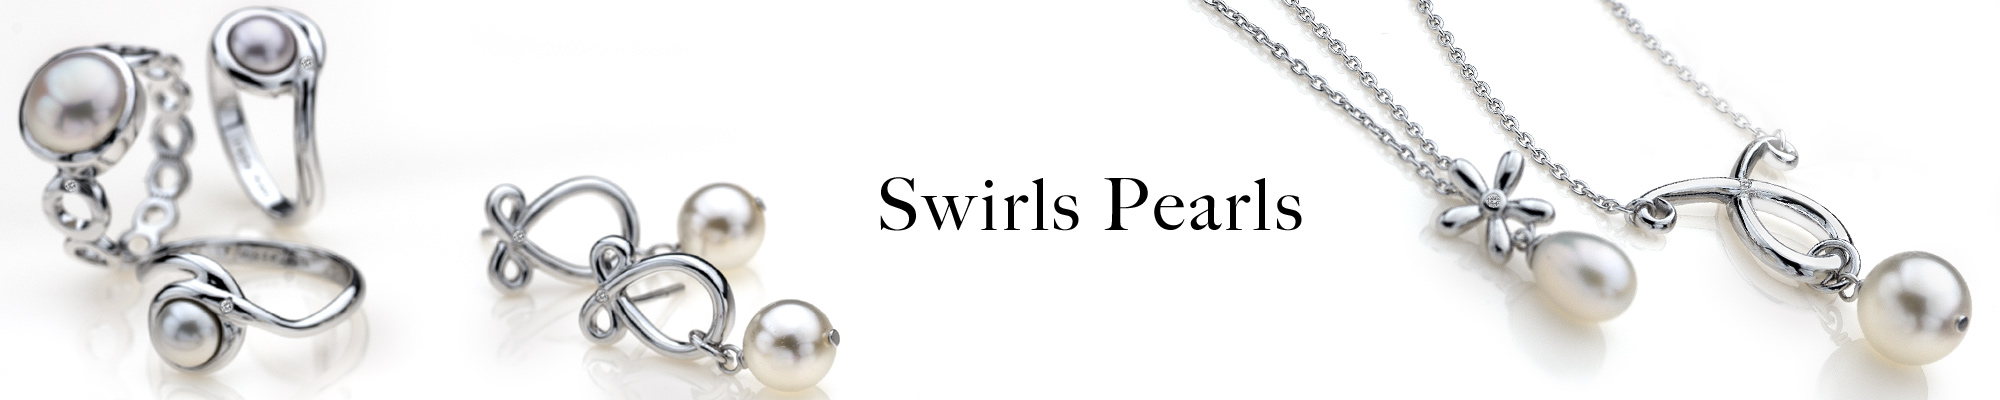 Swirls and Pearls